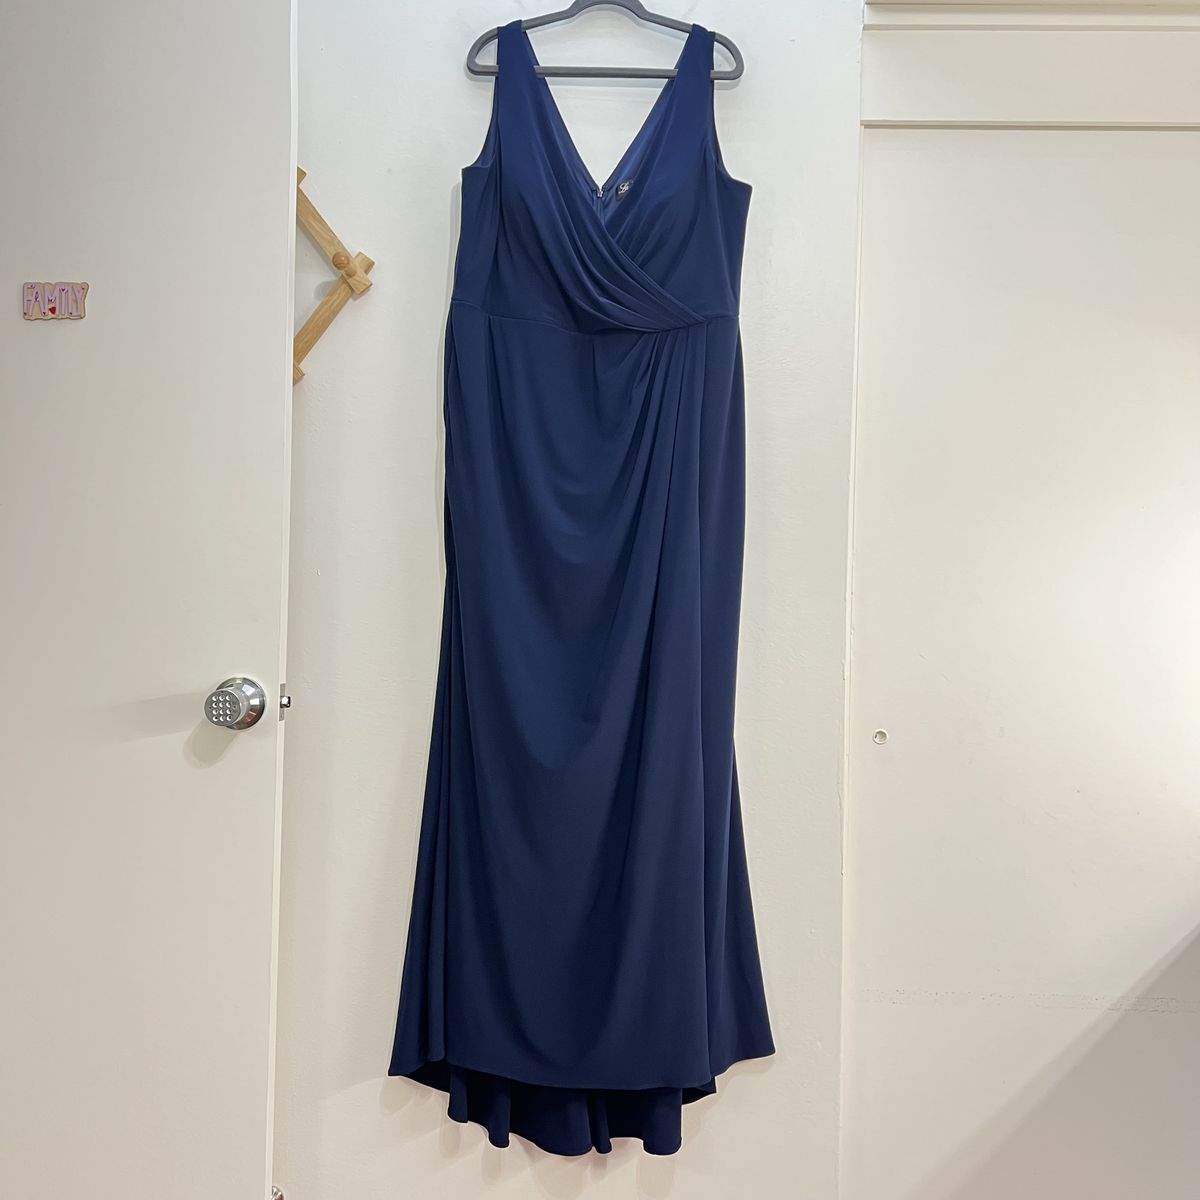 Style 28882 La Femme Plus Size 20 Prom Navy Blue Side Slit Dress on Queenly